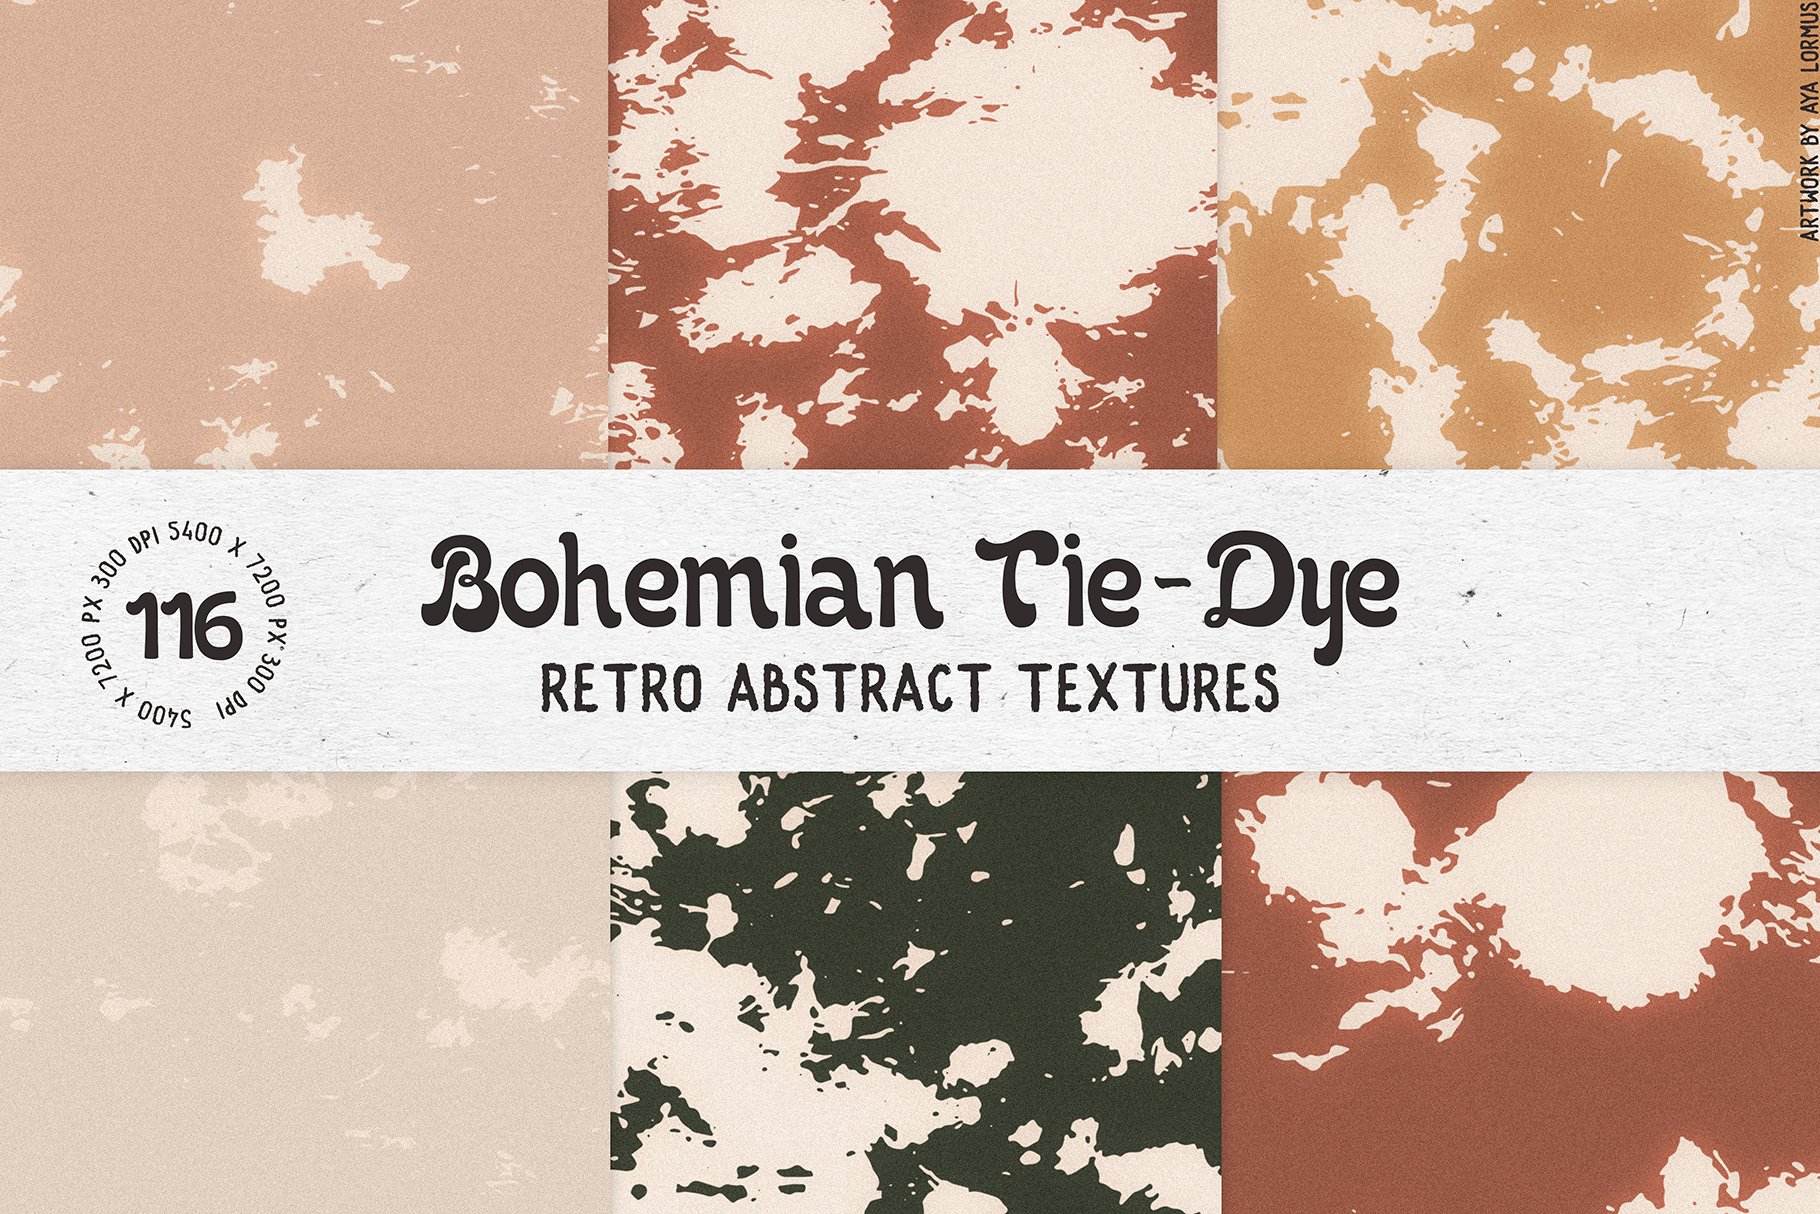 Bohemian TieDye Retro textures cover image.